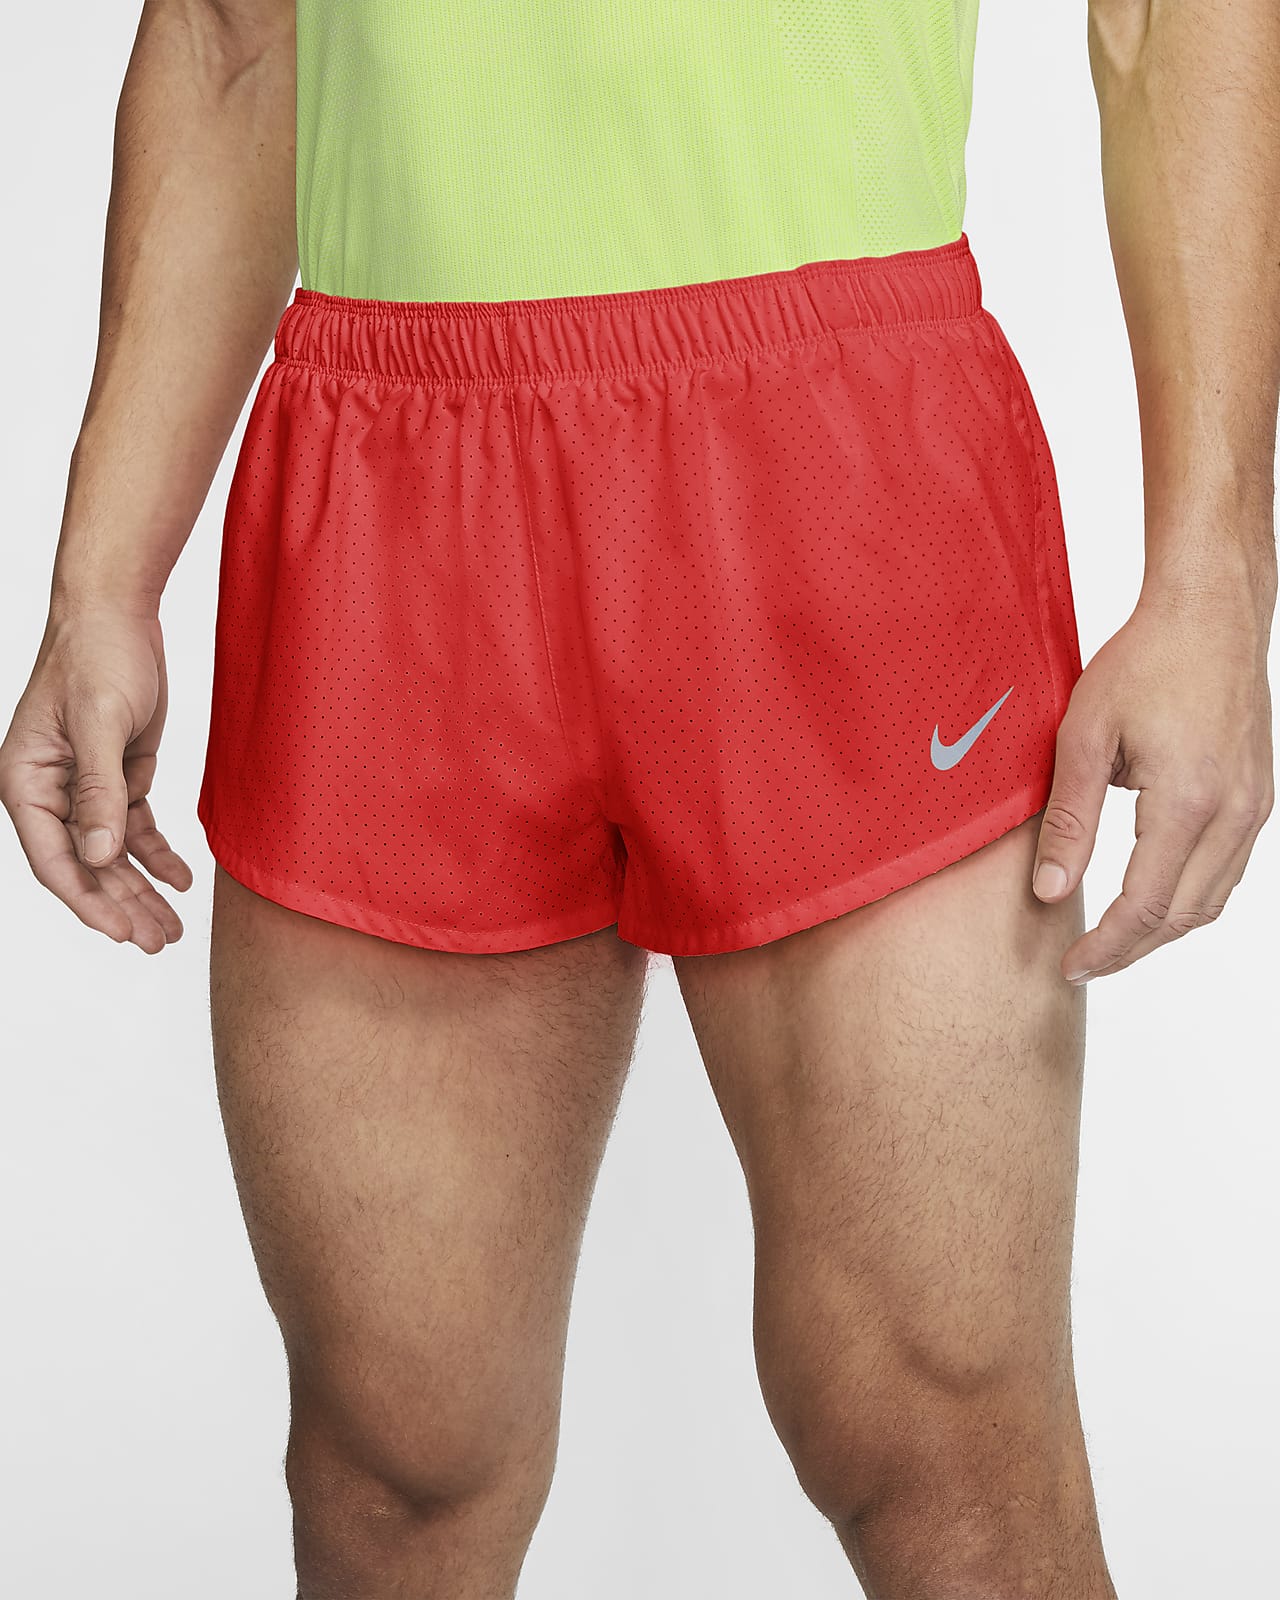 nike fast running shorts men's